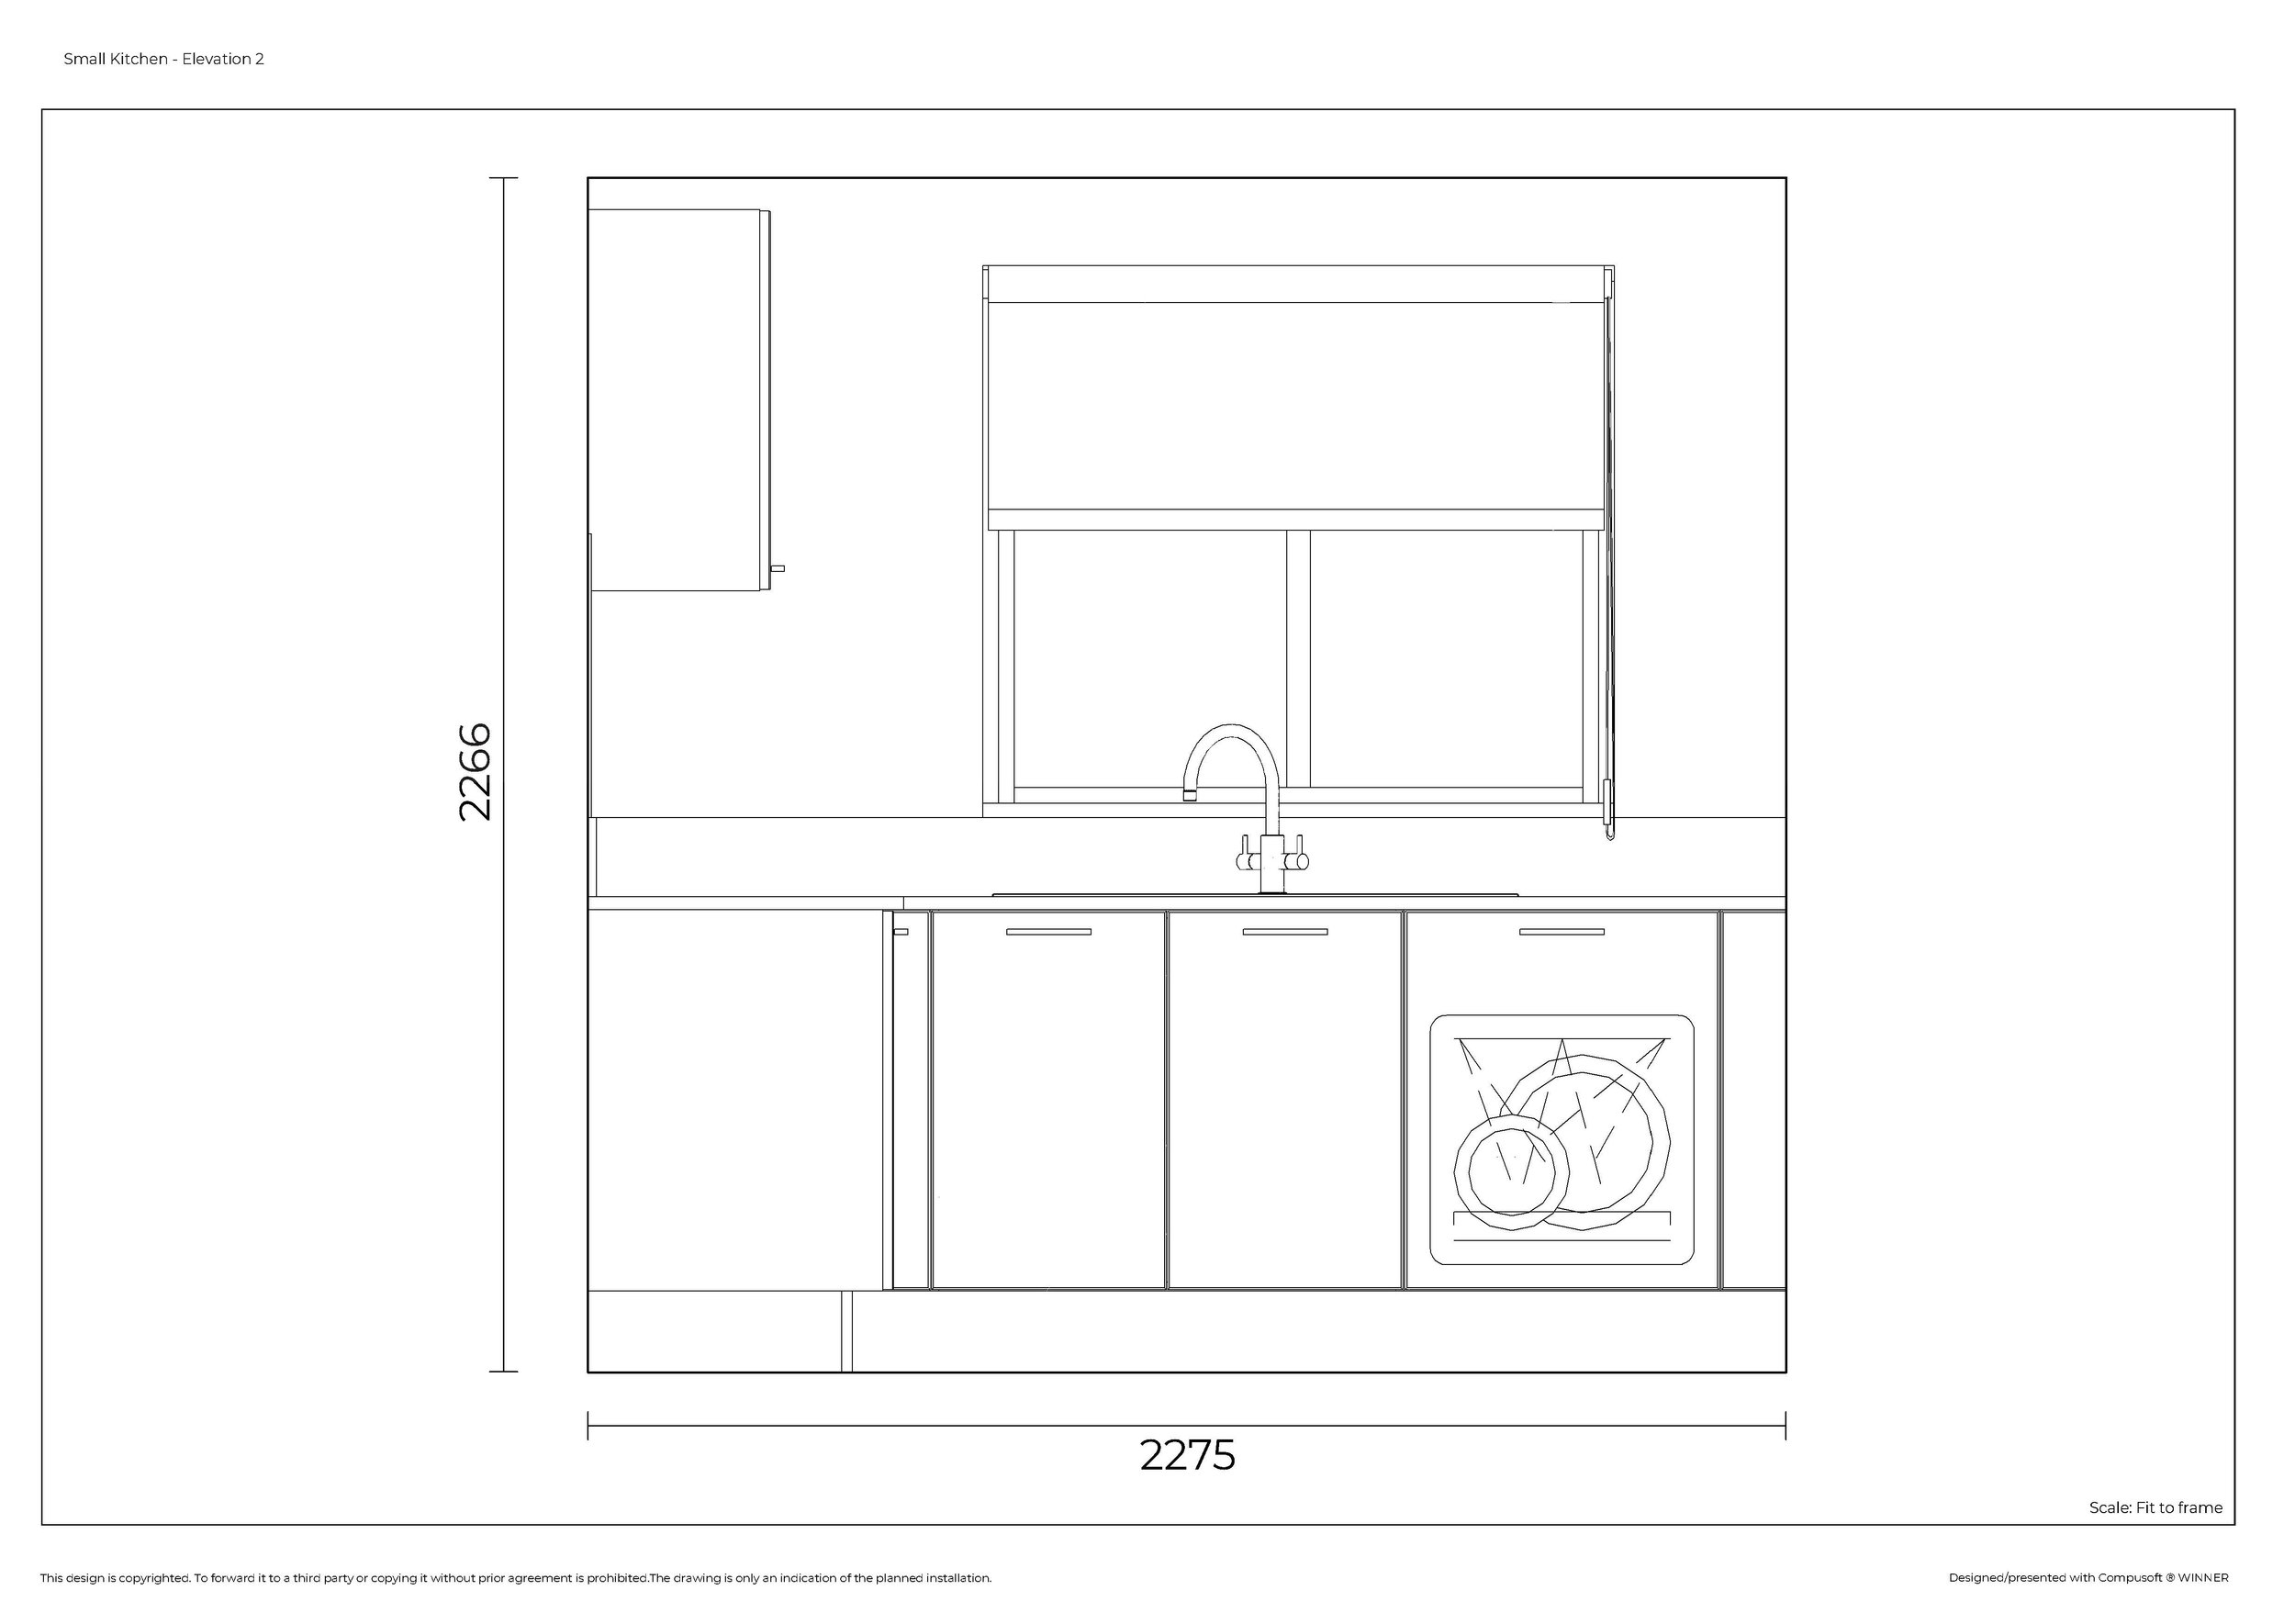 Small Kitchen Elevation 2.jpg